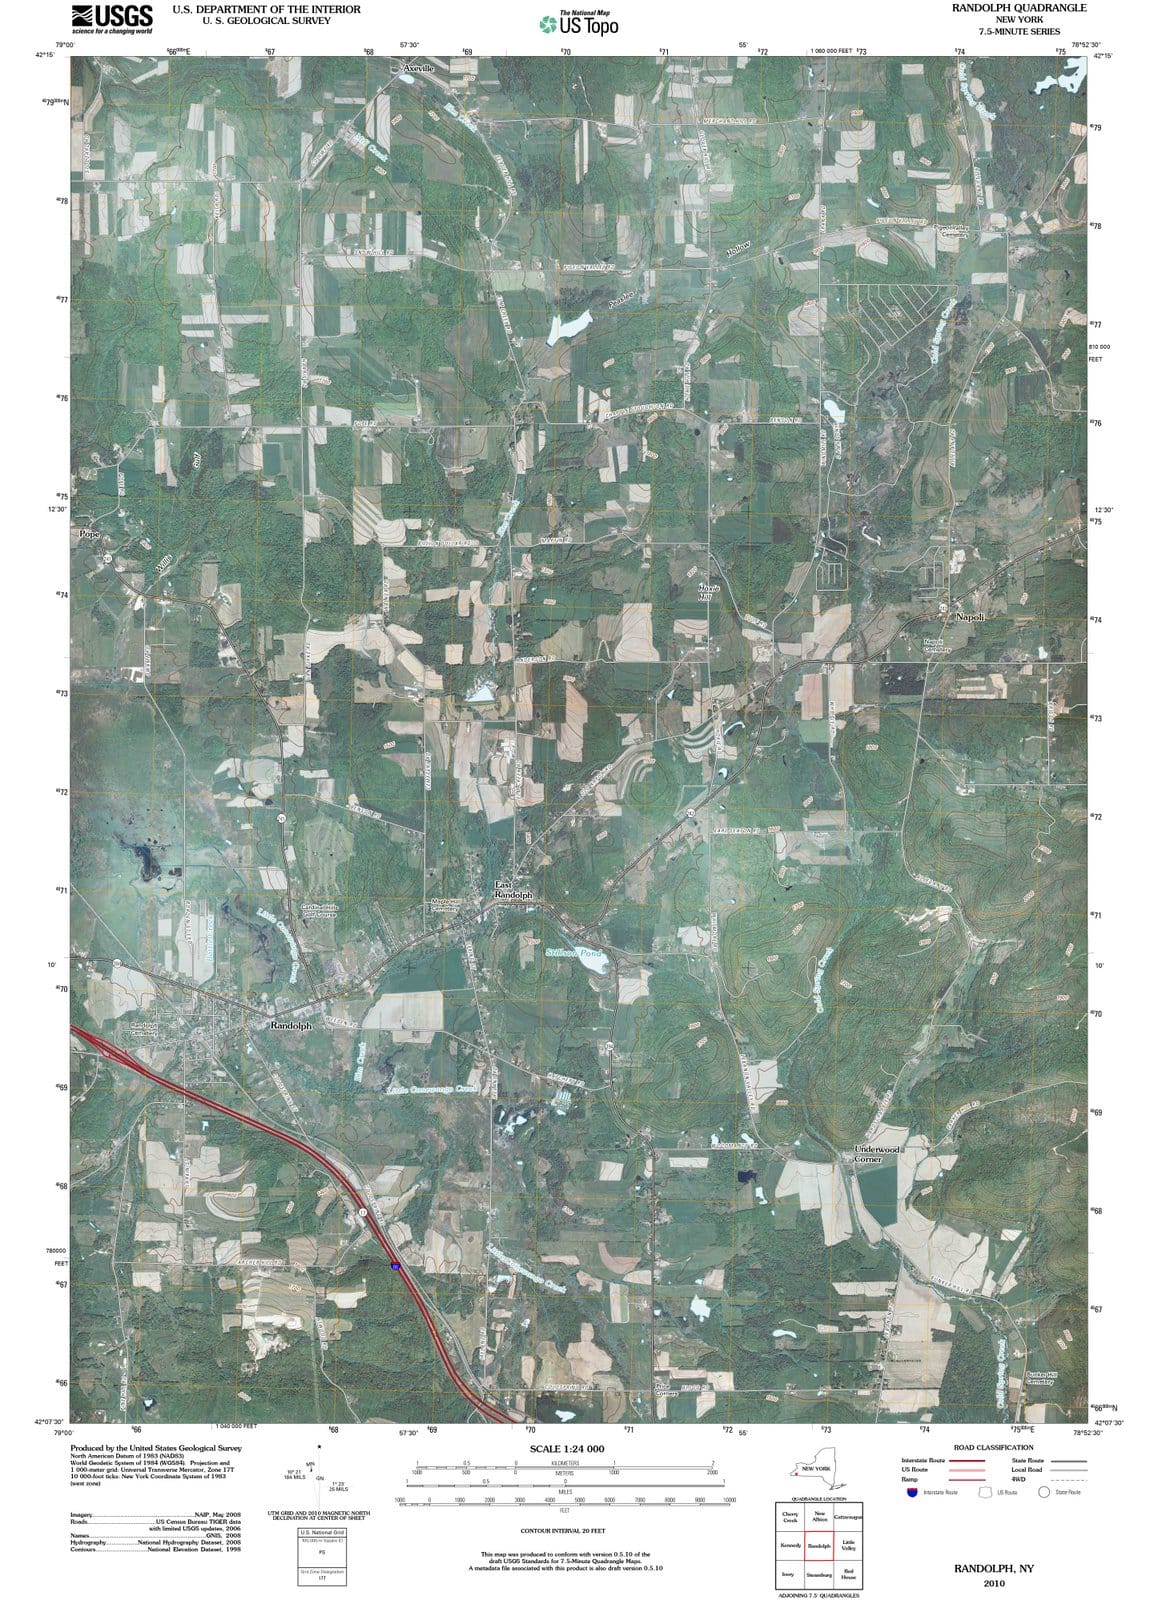 2010 Randolph, NY - New York - USGS Topographic Map